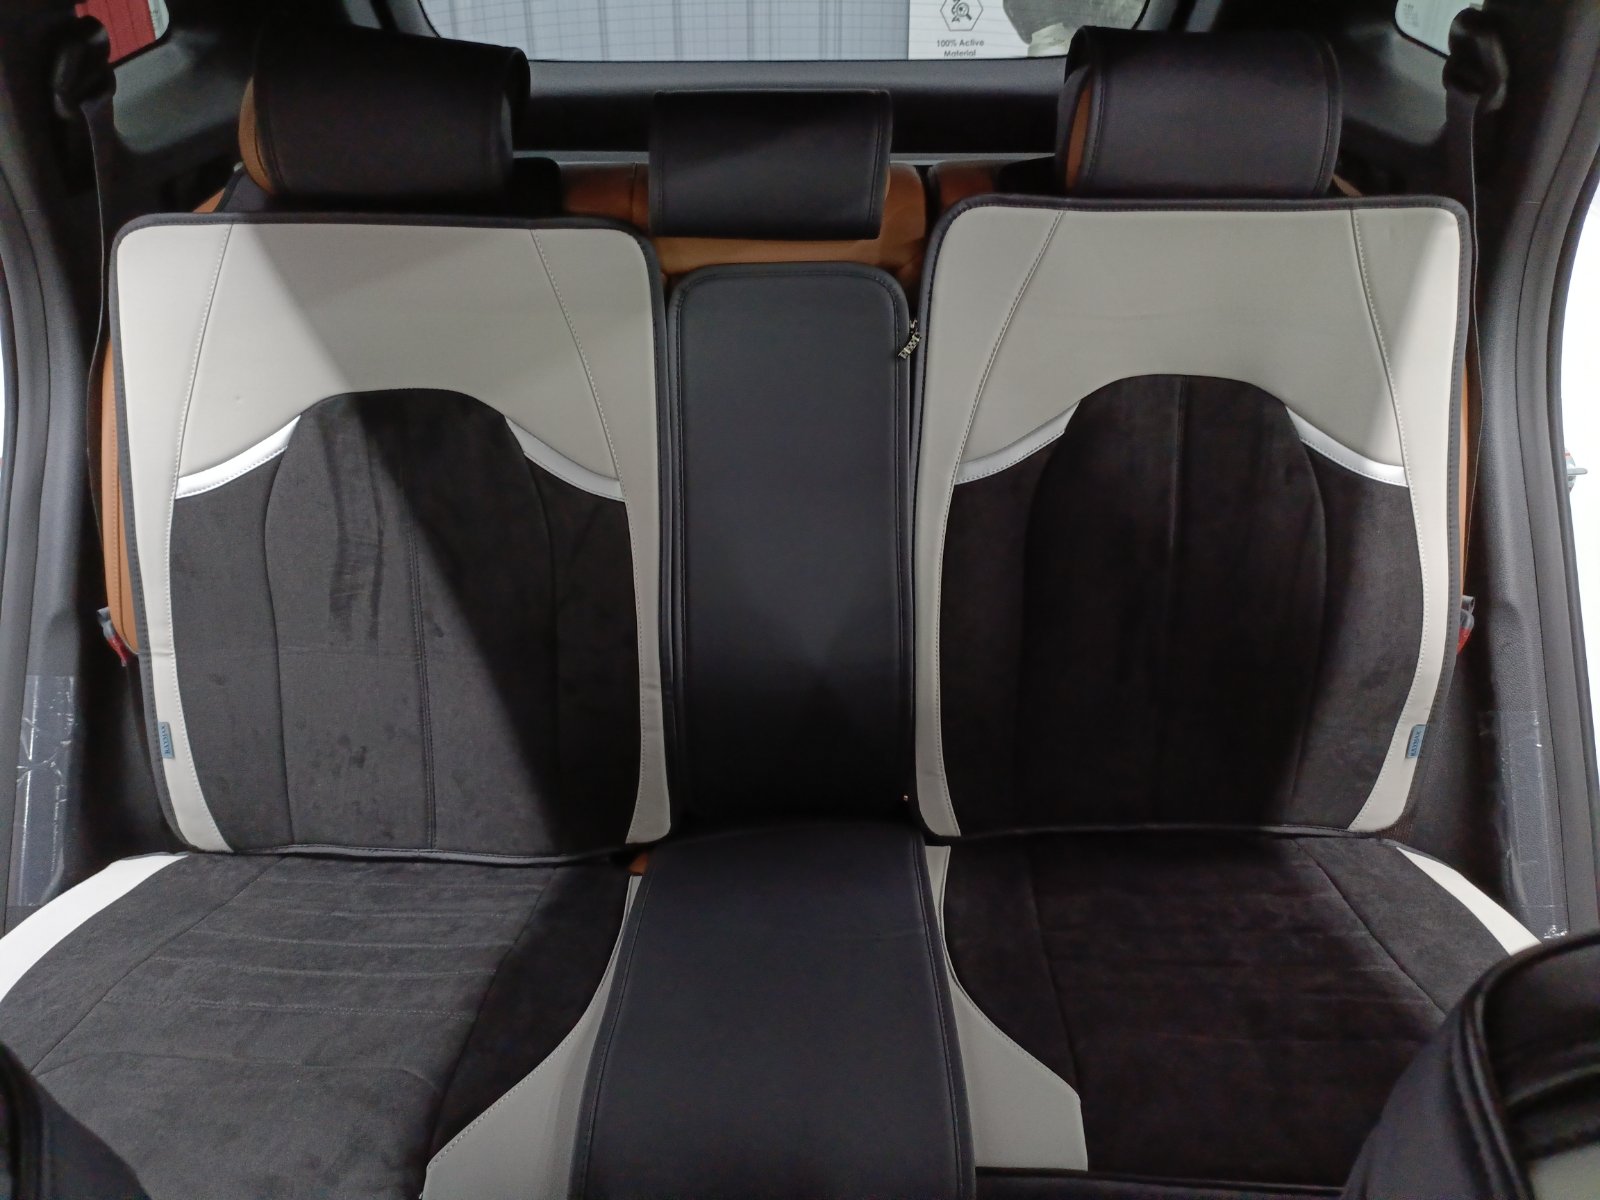 RAYMAX LUXURY SEAT COVER (H-23QD-09) (1) SET (BLACK + WHITE)